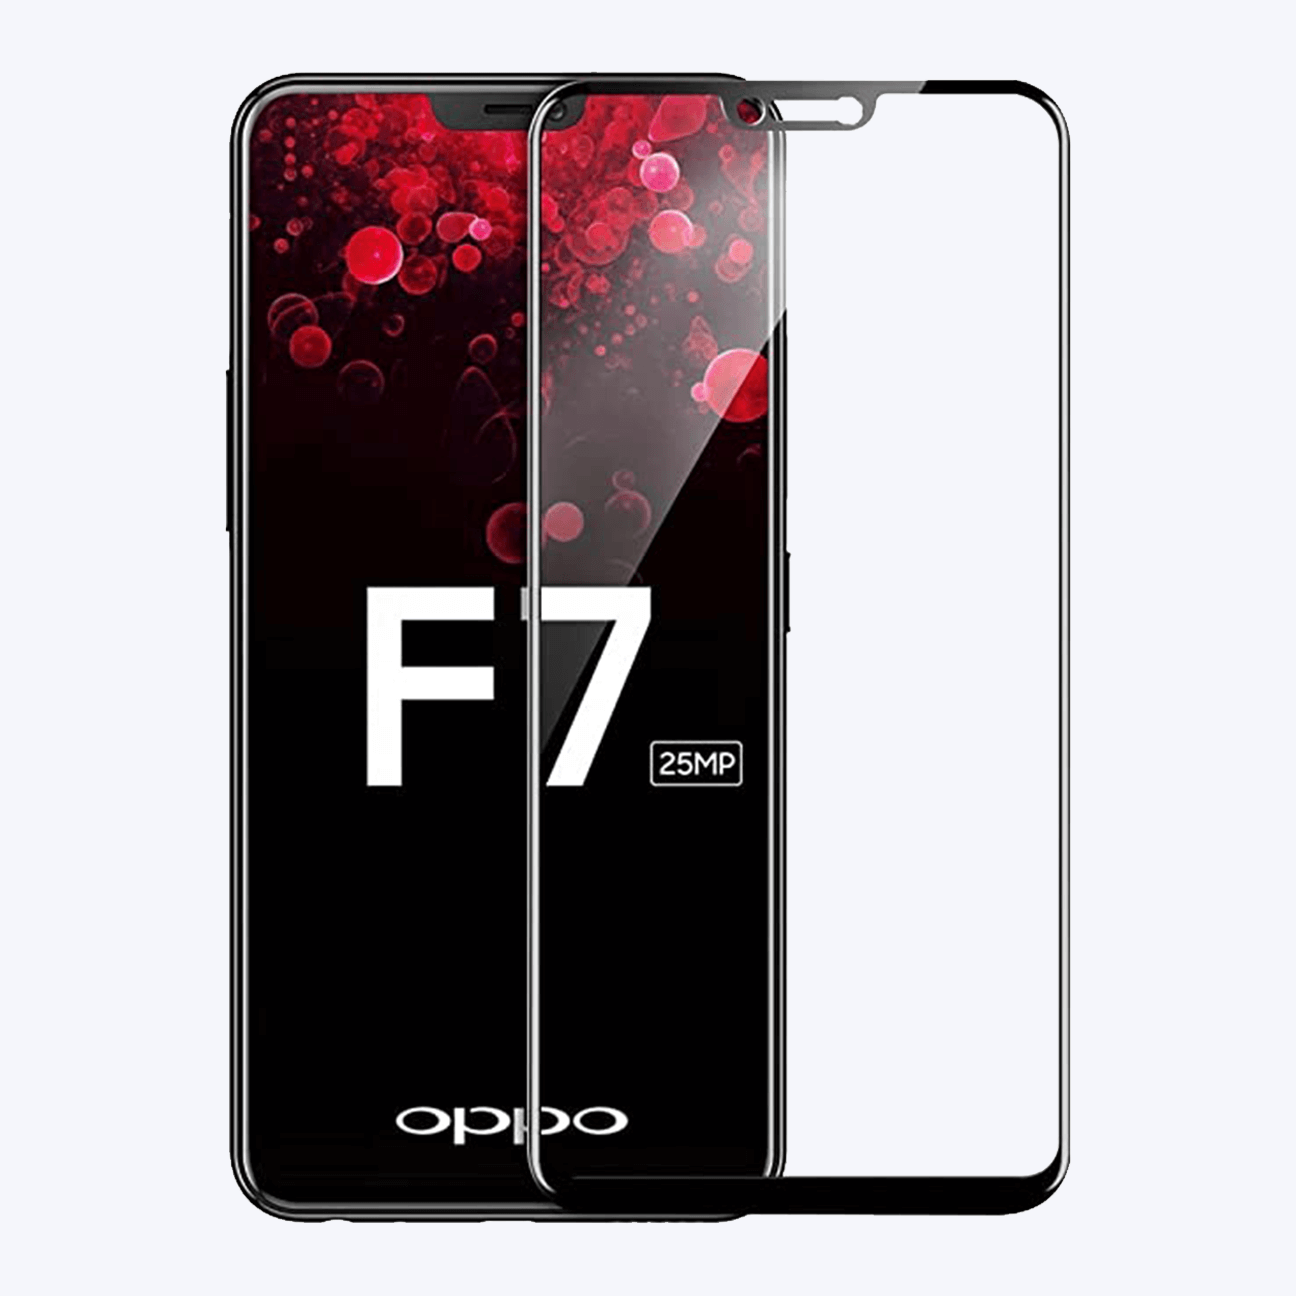 Oppo F7 11D Mobile Glass